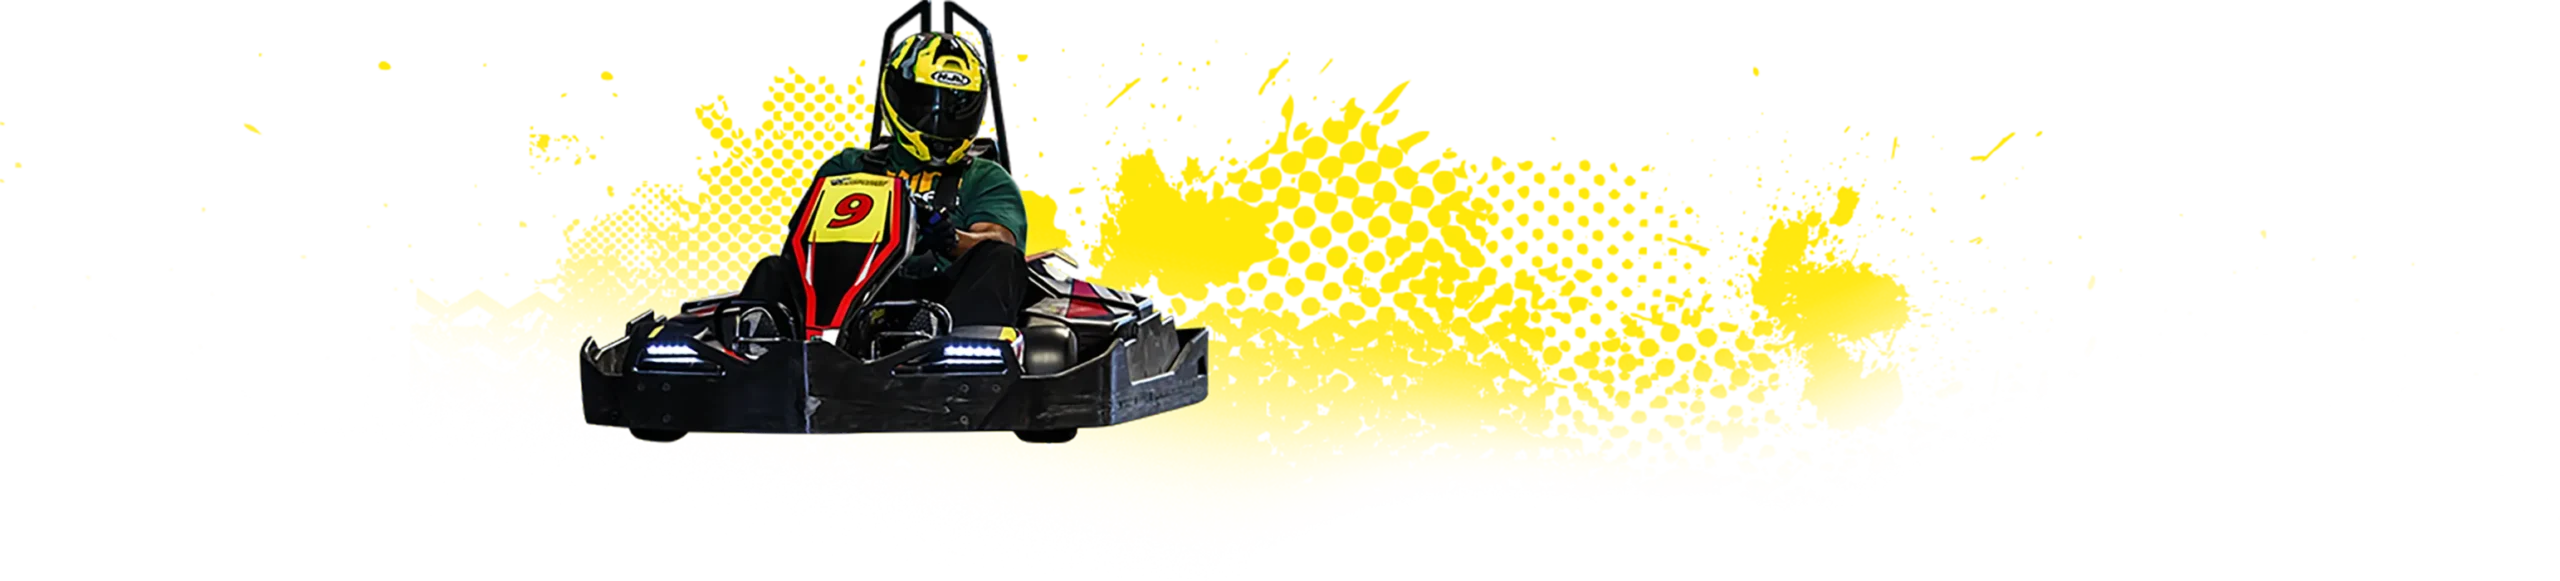 Graphic designed lone gokart racer